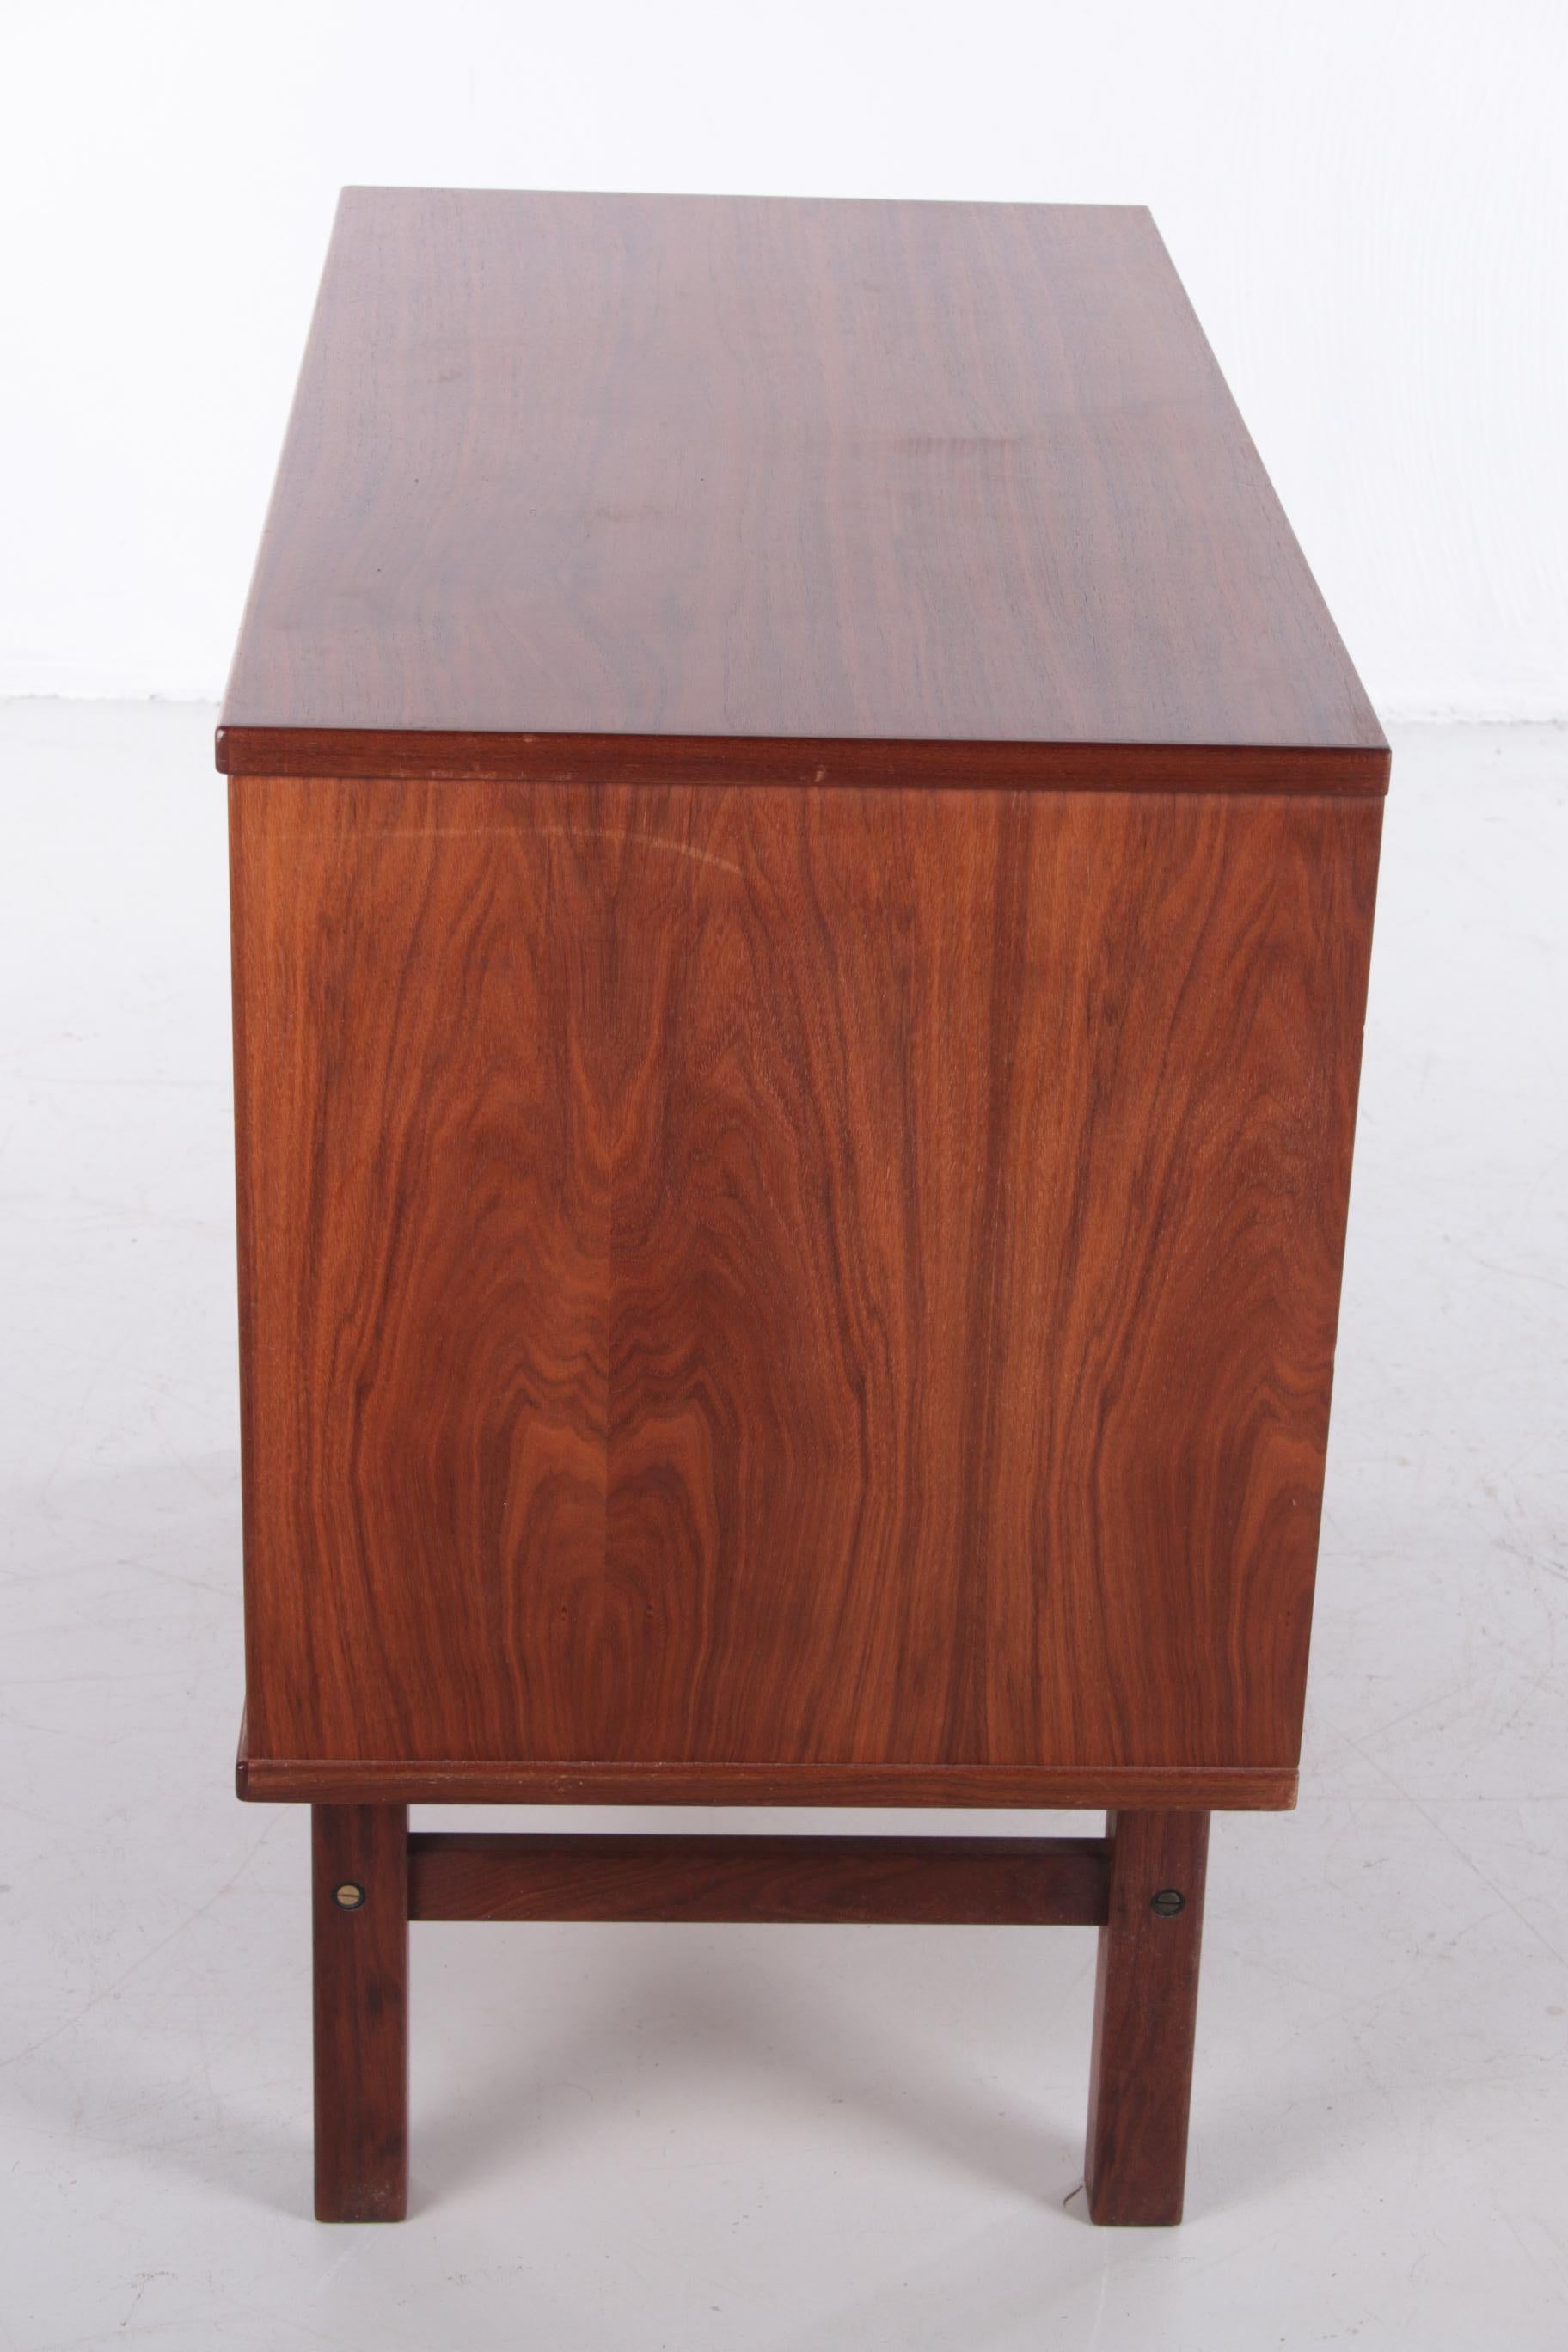 Mid-20th Century Danish Designer Teak Wooden 3 Drawer Cabinet by Nils Jonsson, 1960s